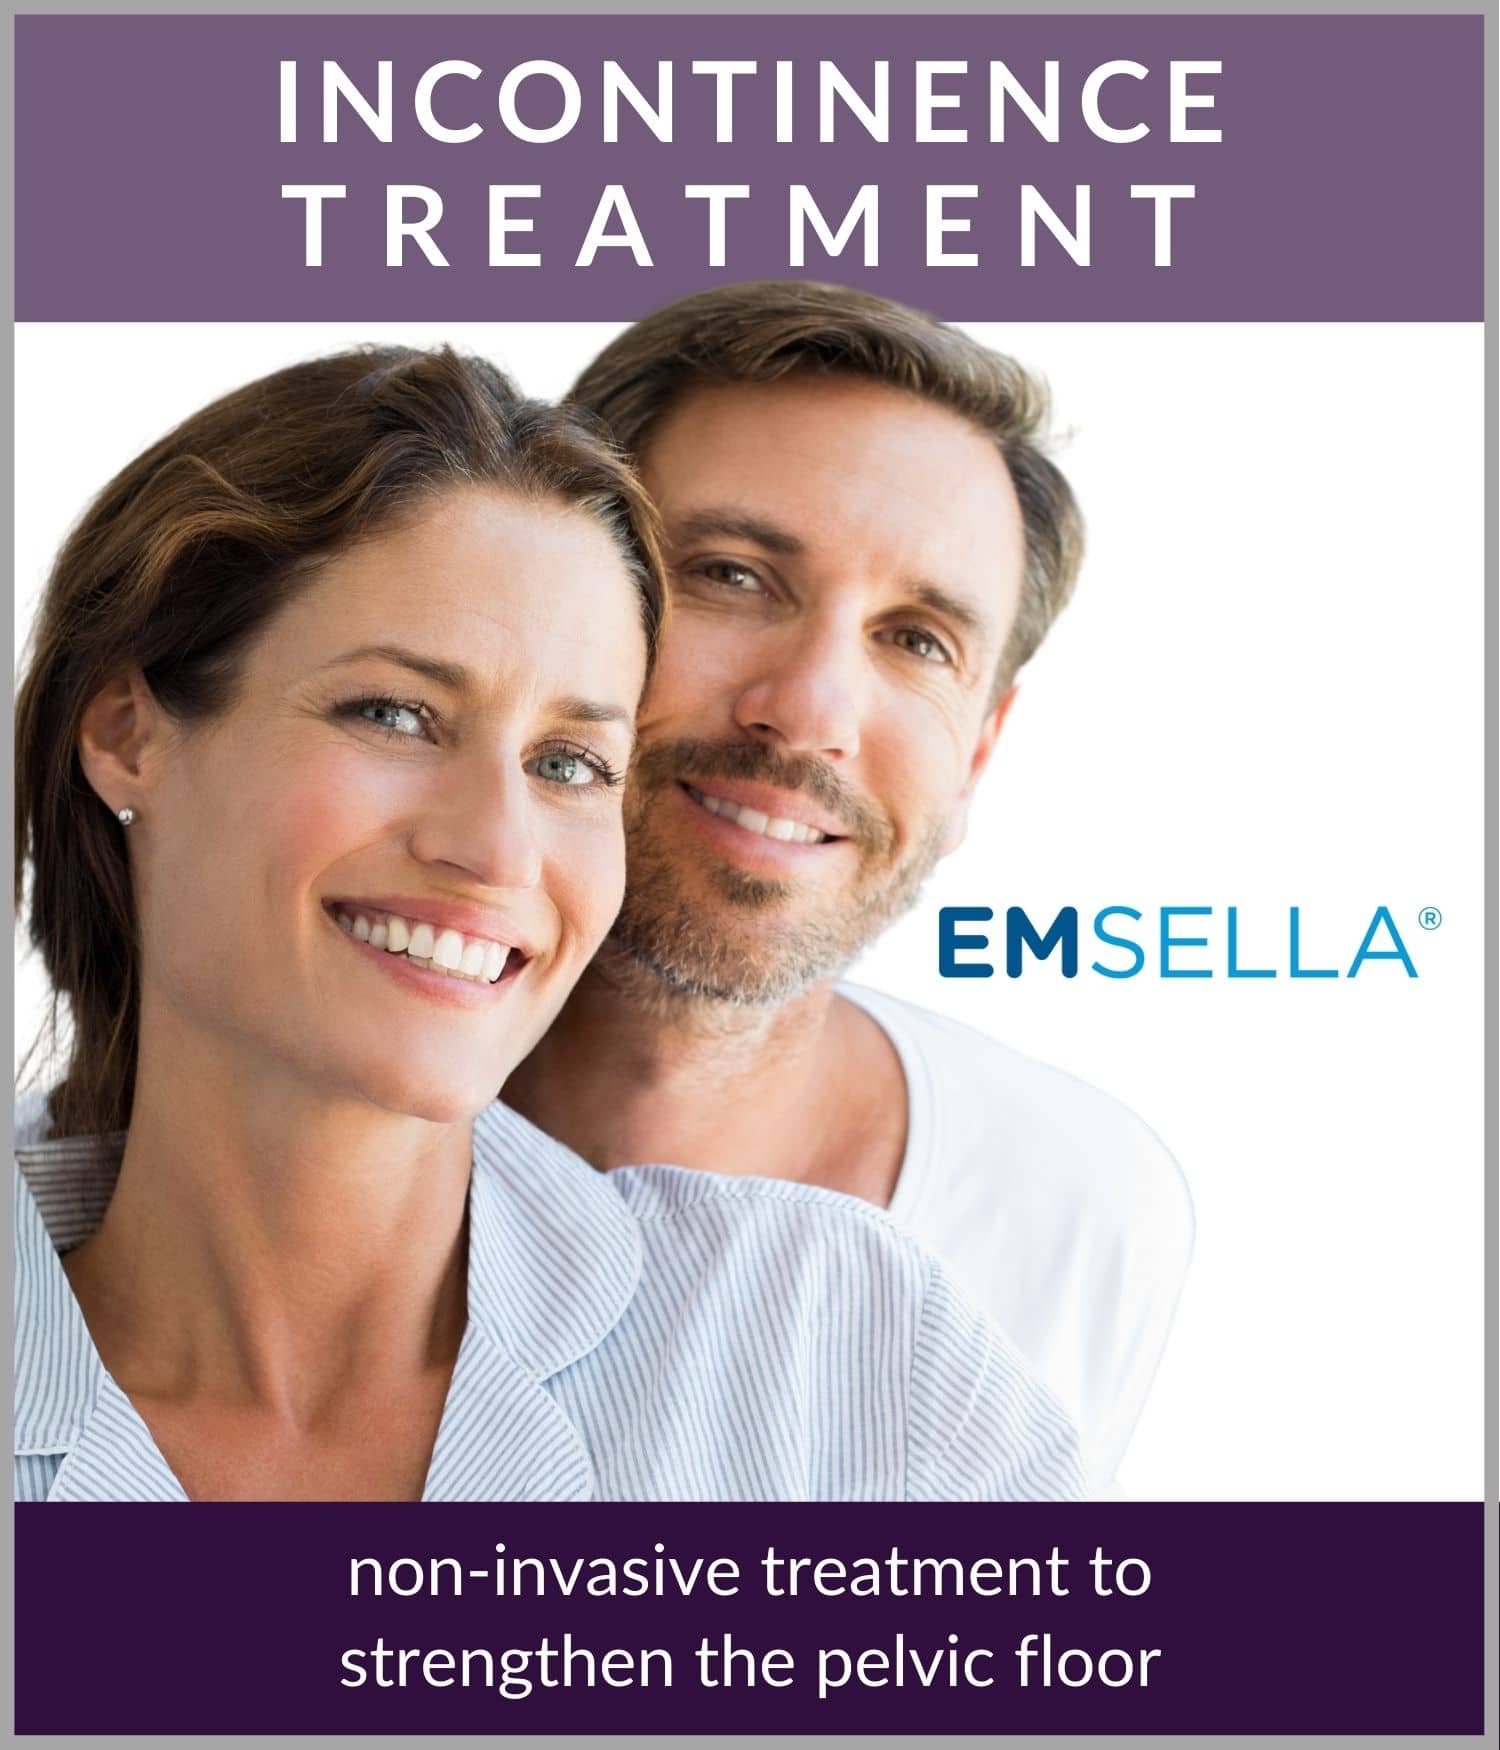 Beautiful smiling couple promoting Emsella Incontinence treatment